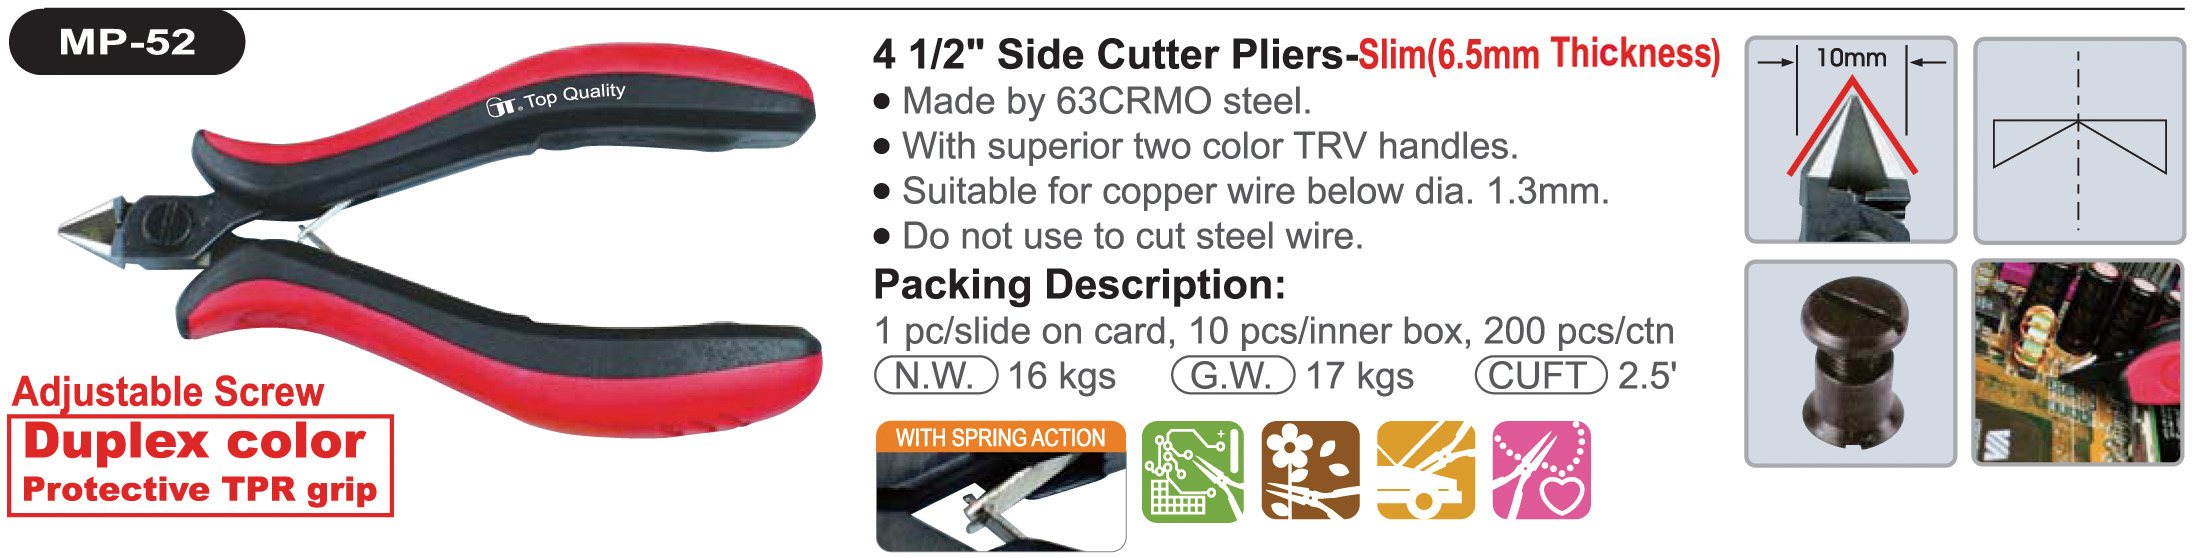 proimages/product/pliers/cutting_pliers/Precision_Electronics_Diagonal_Cutters/MP-52/MP-52.jpg